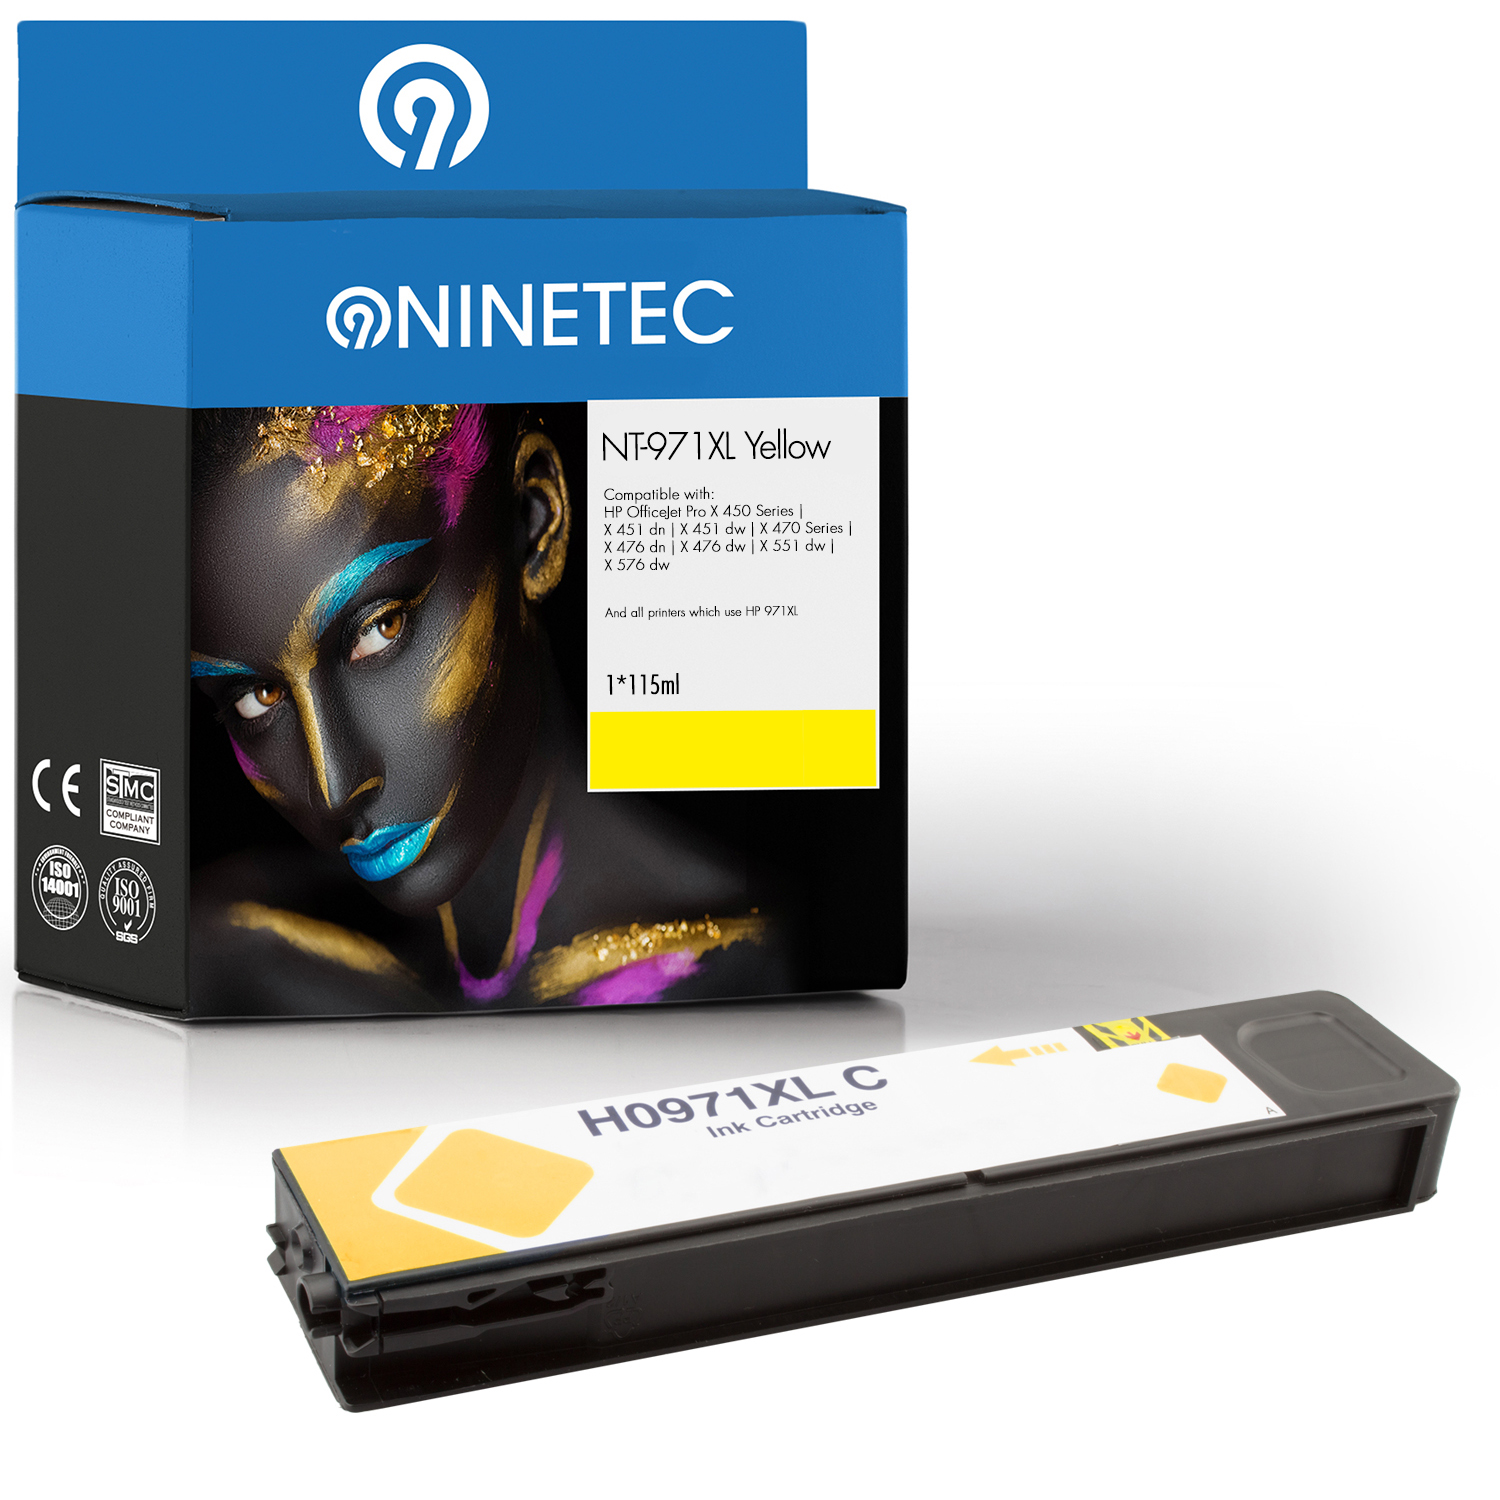 1 HP AE) Tintenpatrone NINETEC ersetzt yellow 971XL 628 Patrone (CN